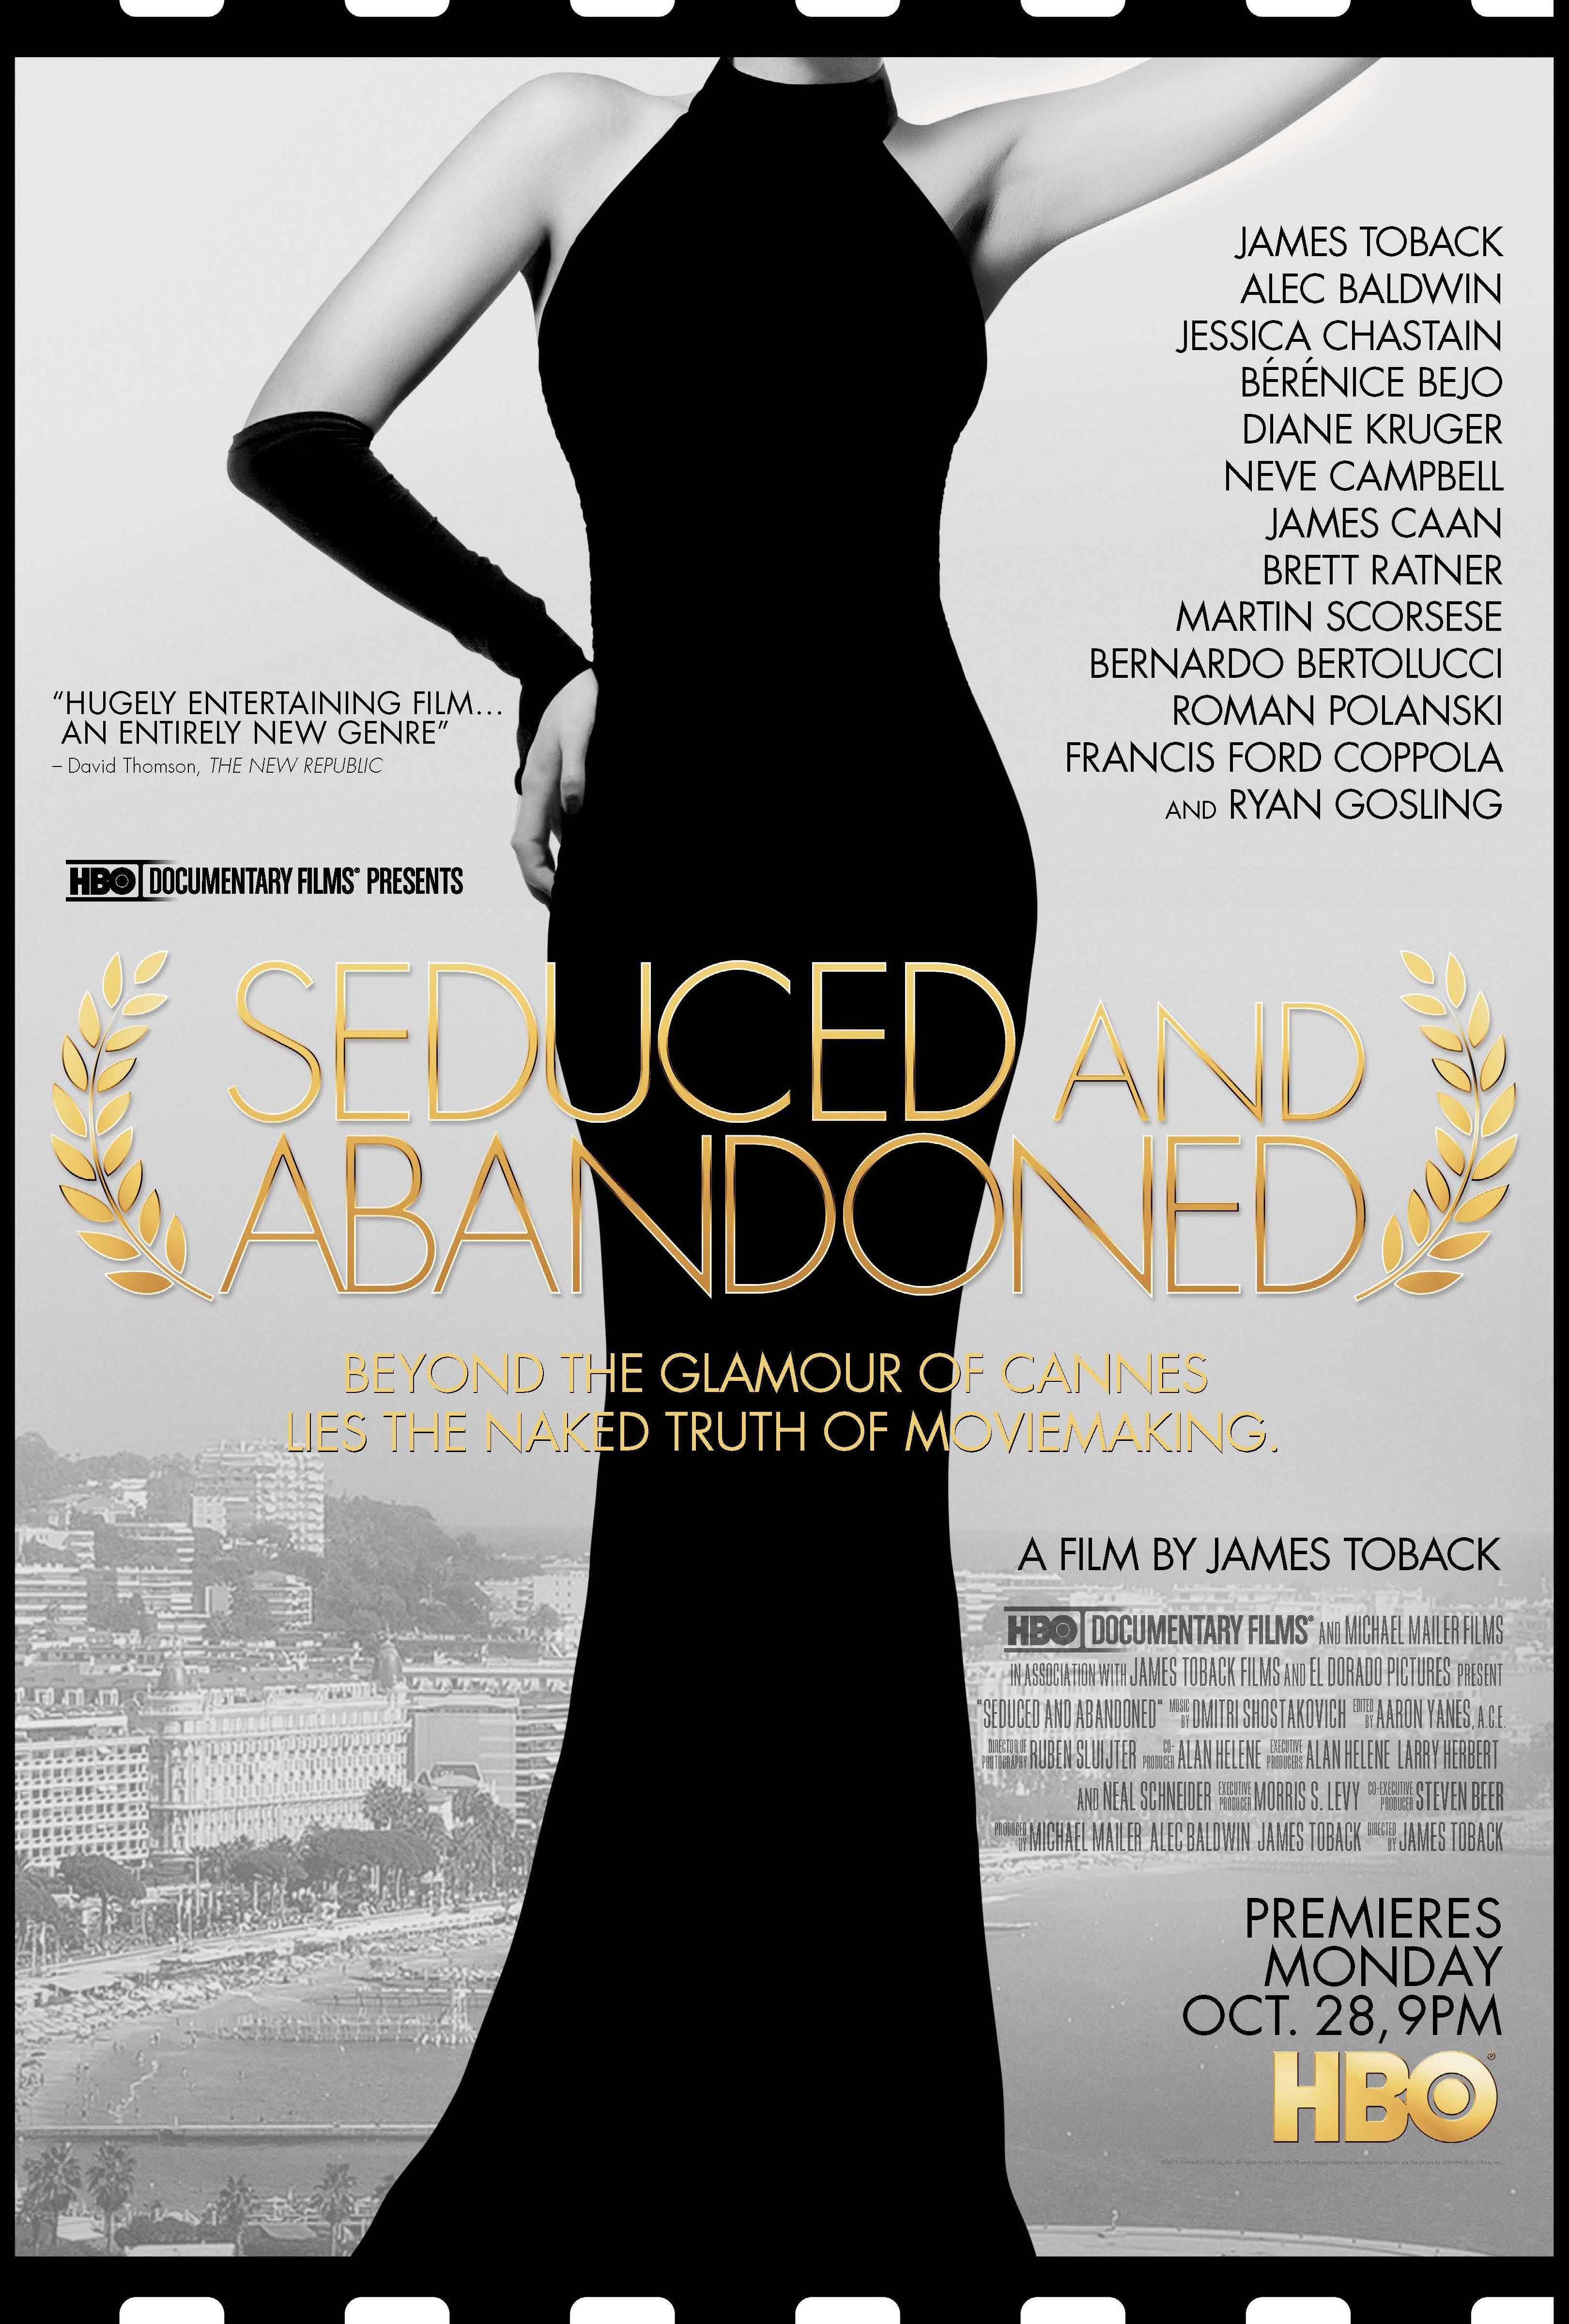 L'affiche du film Seduced and Abandoned